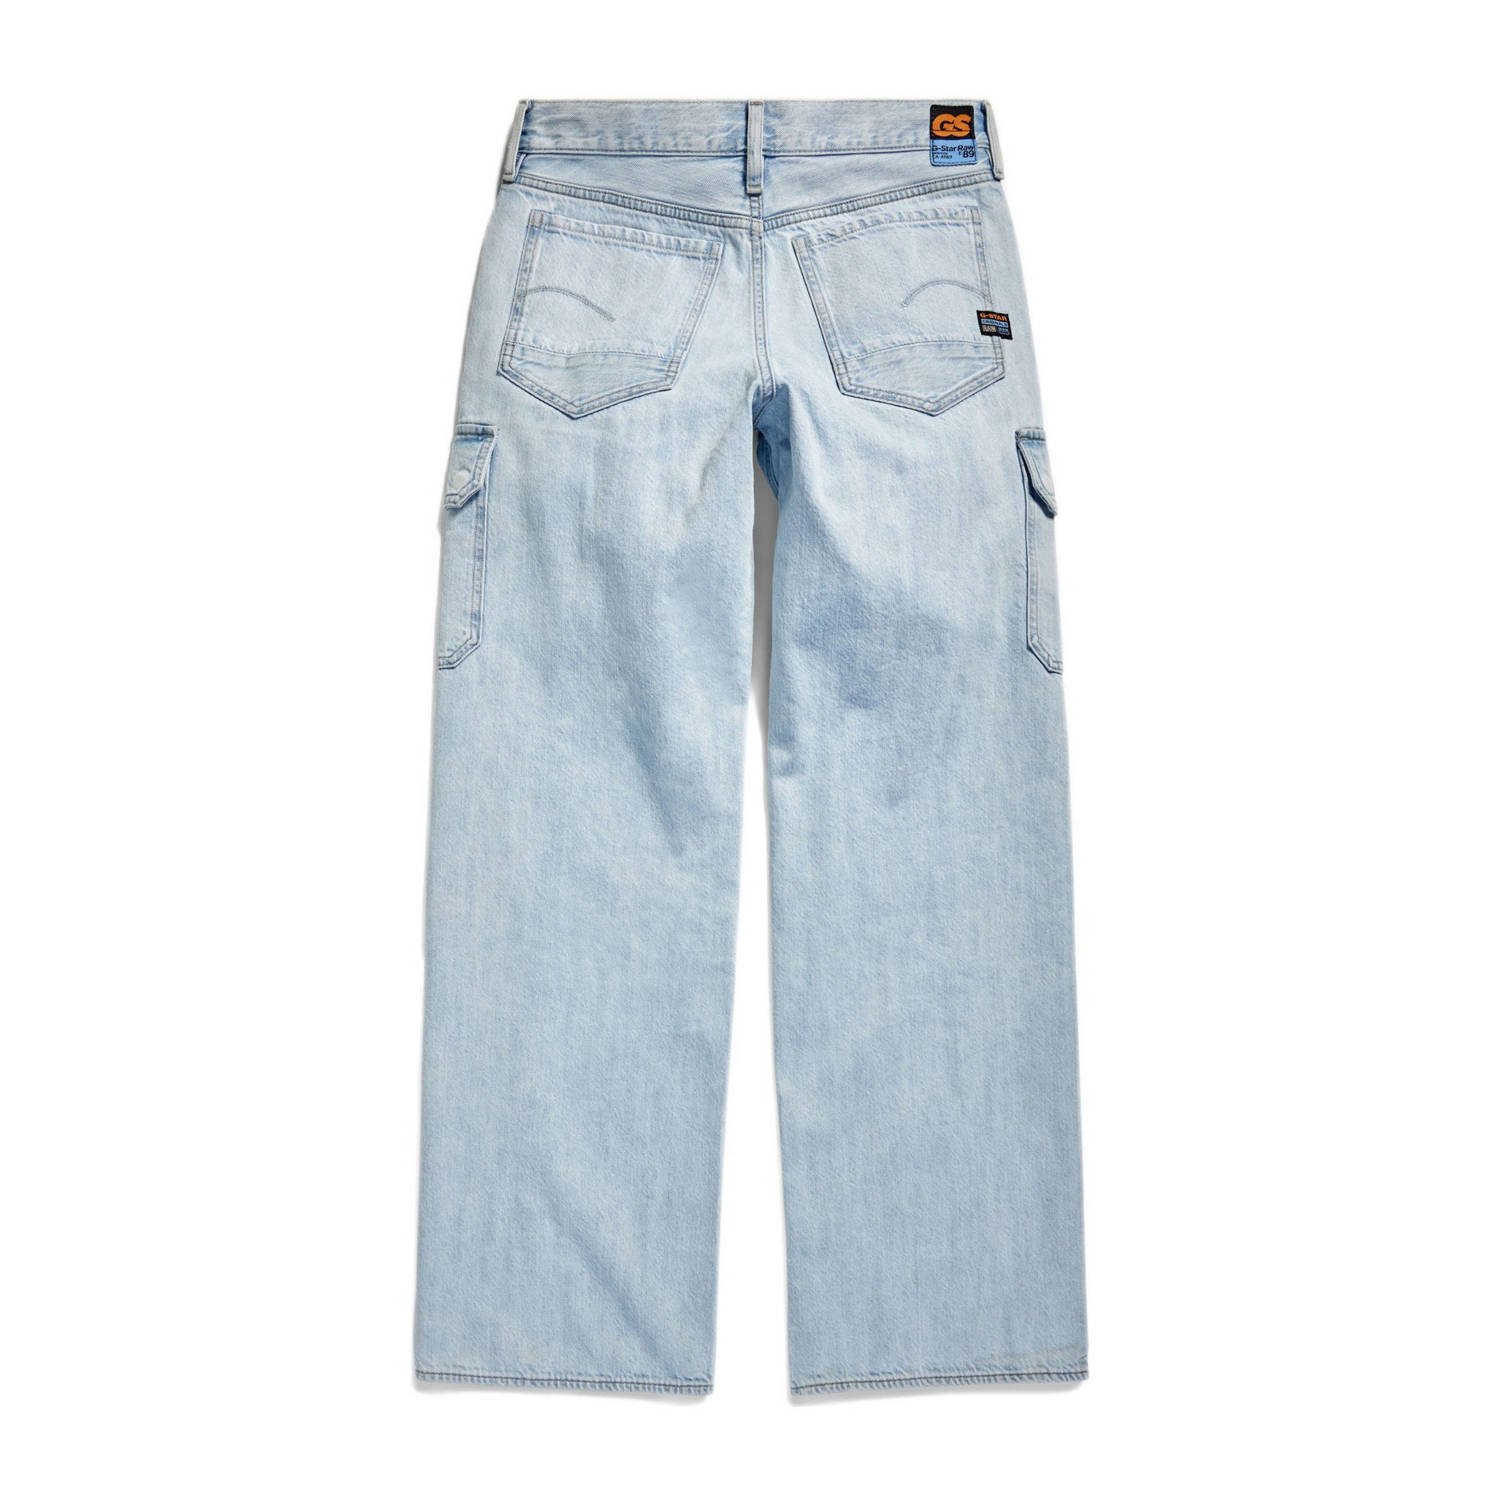 G-Star RAW Judee low waist cargo jeans sun faded piscina blue